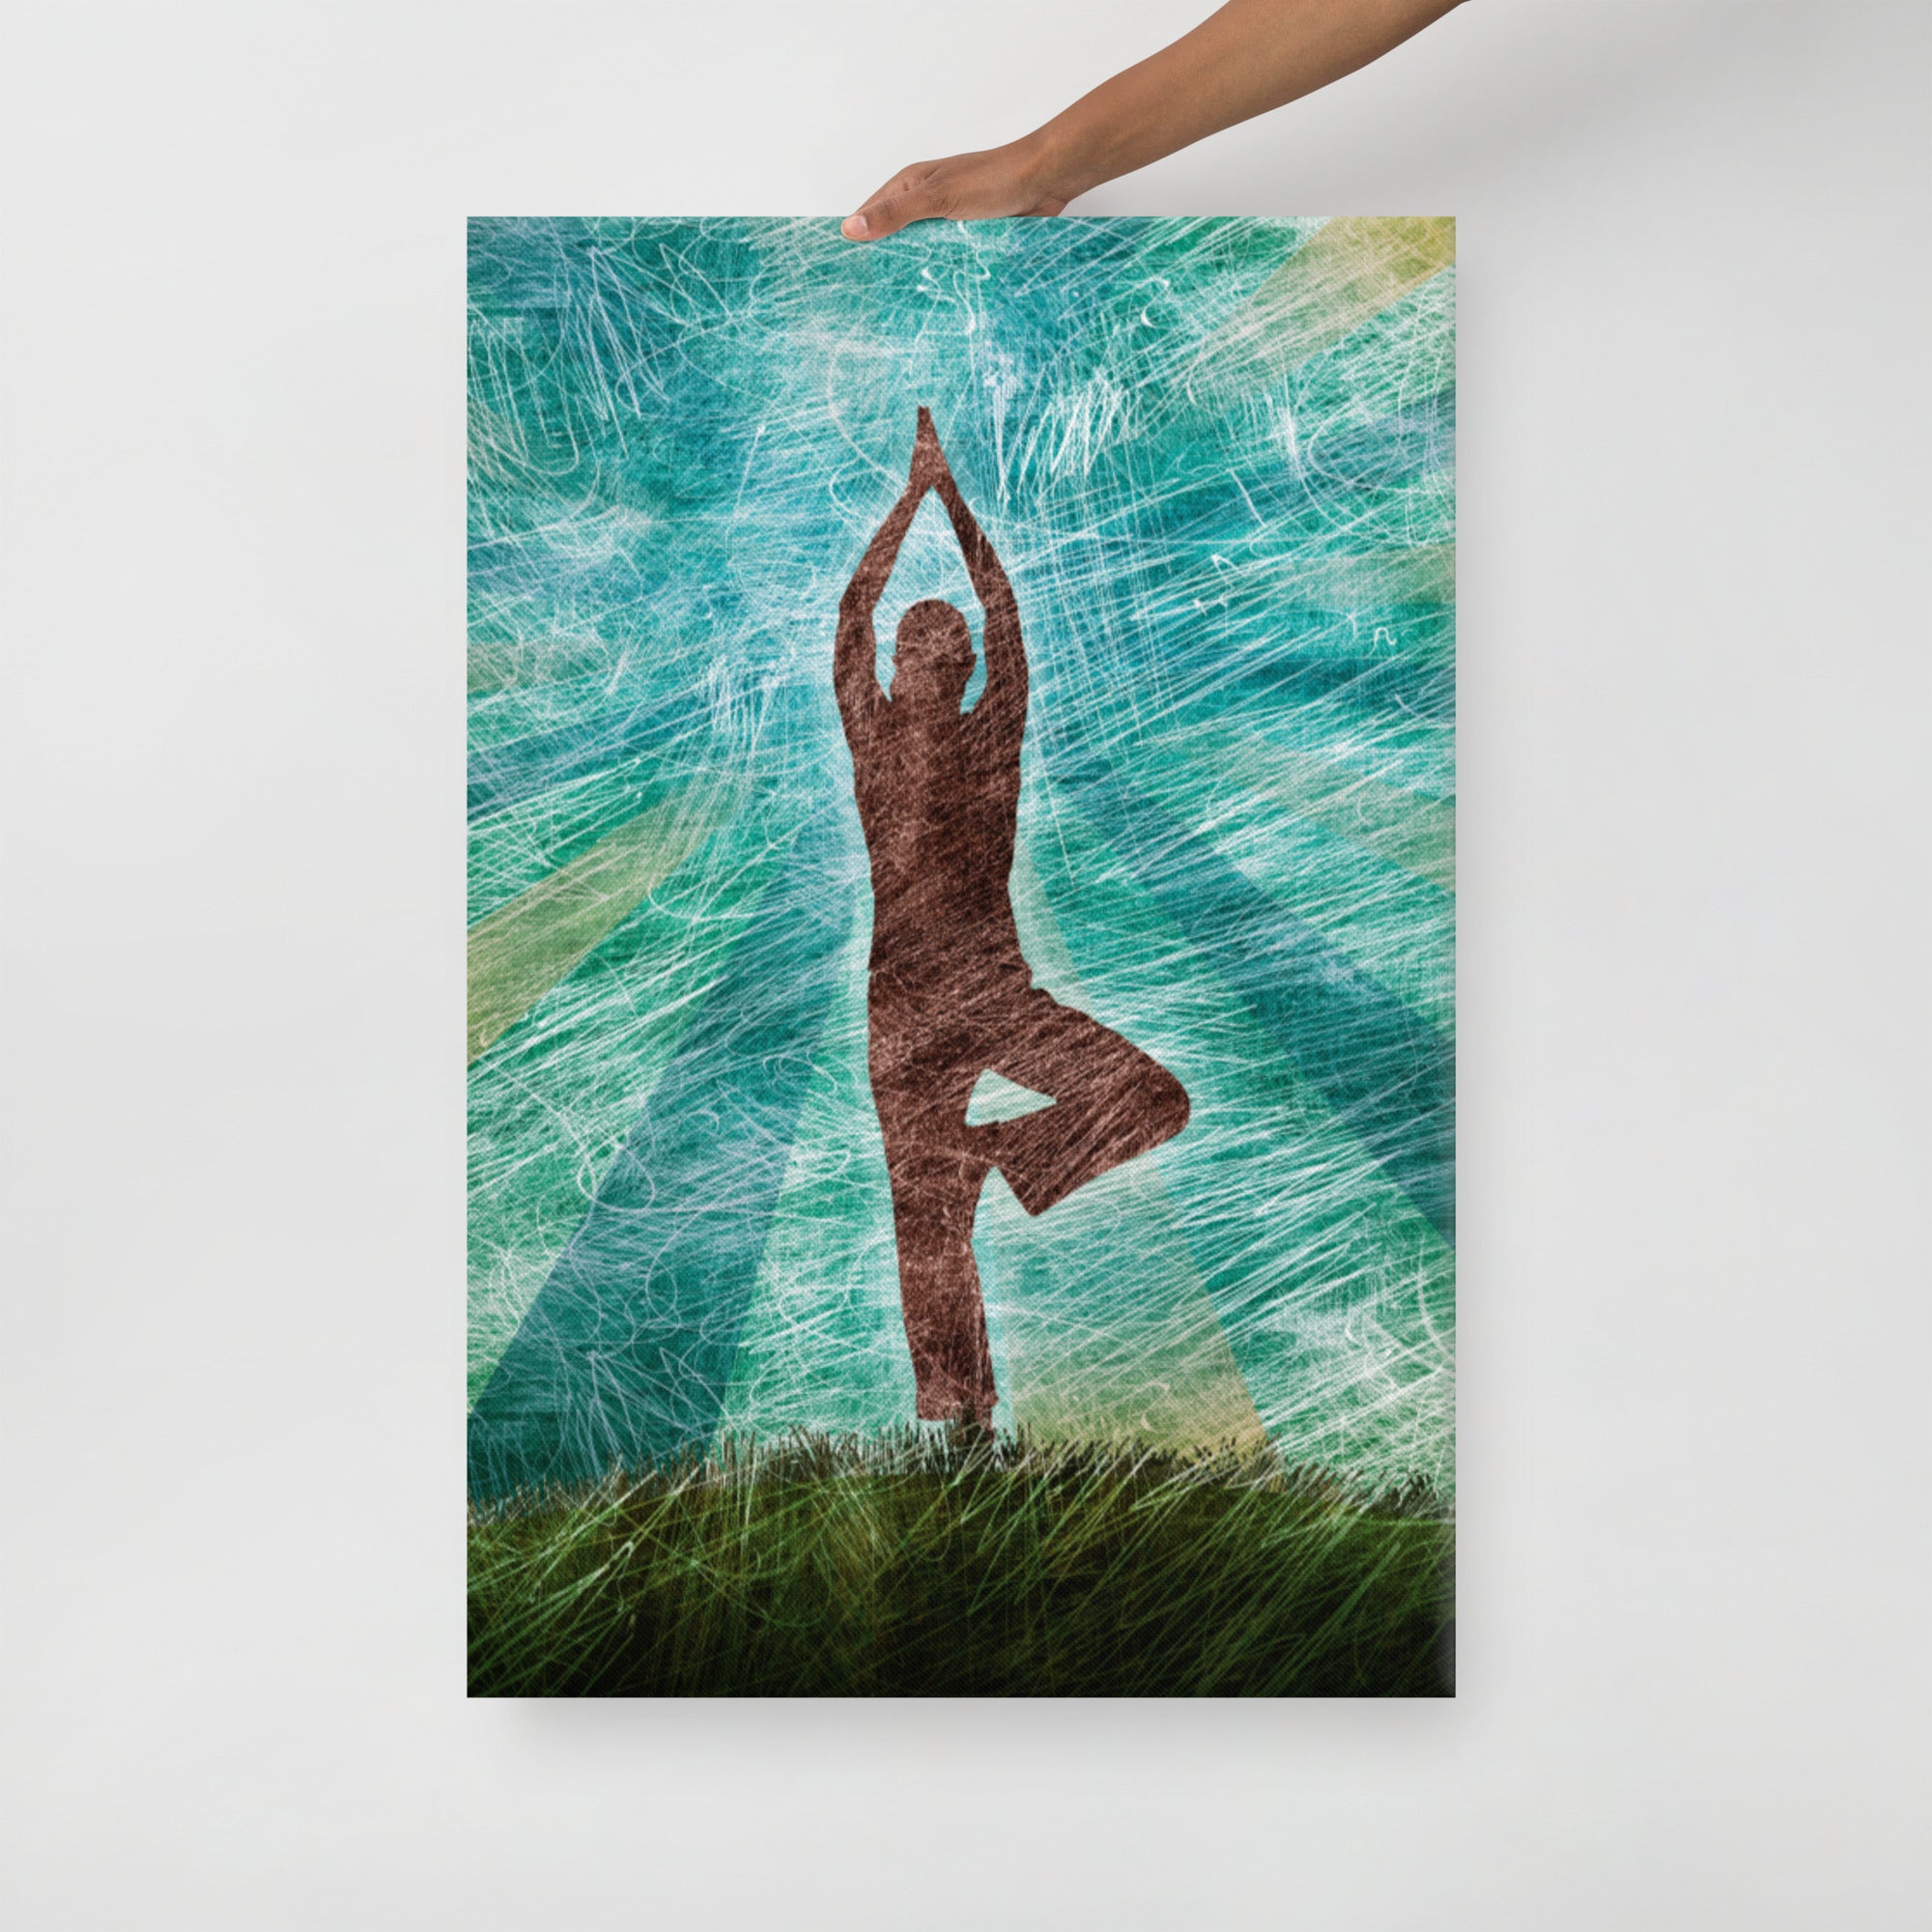 Yoga pose' Poster 24x18 | Spreadshirt